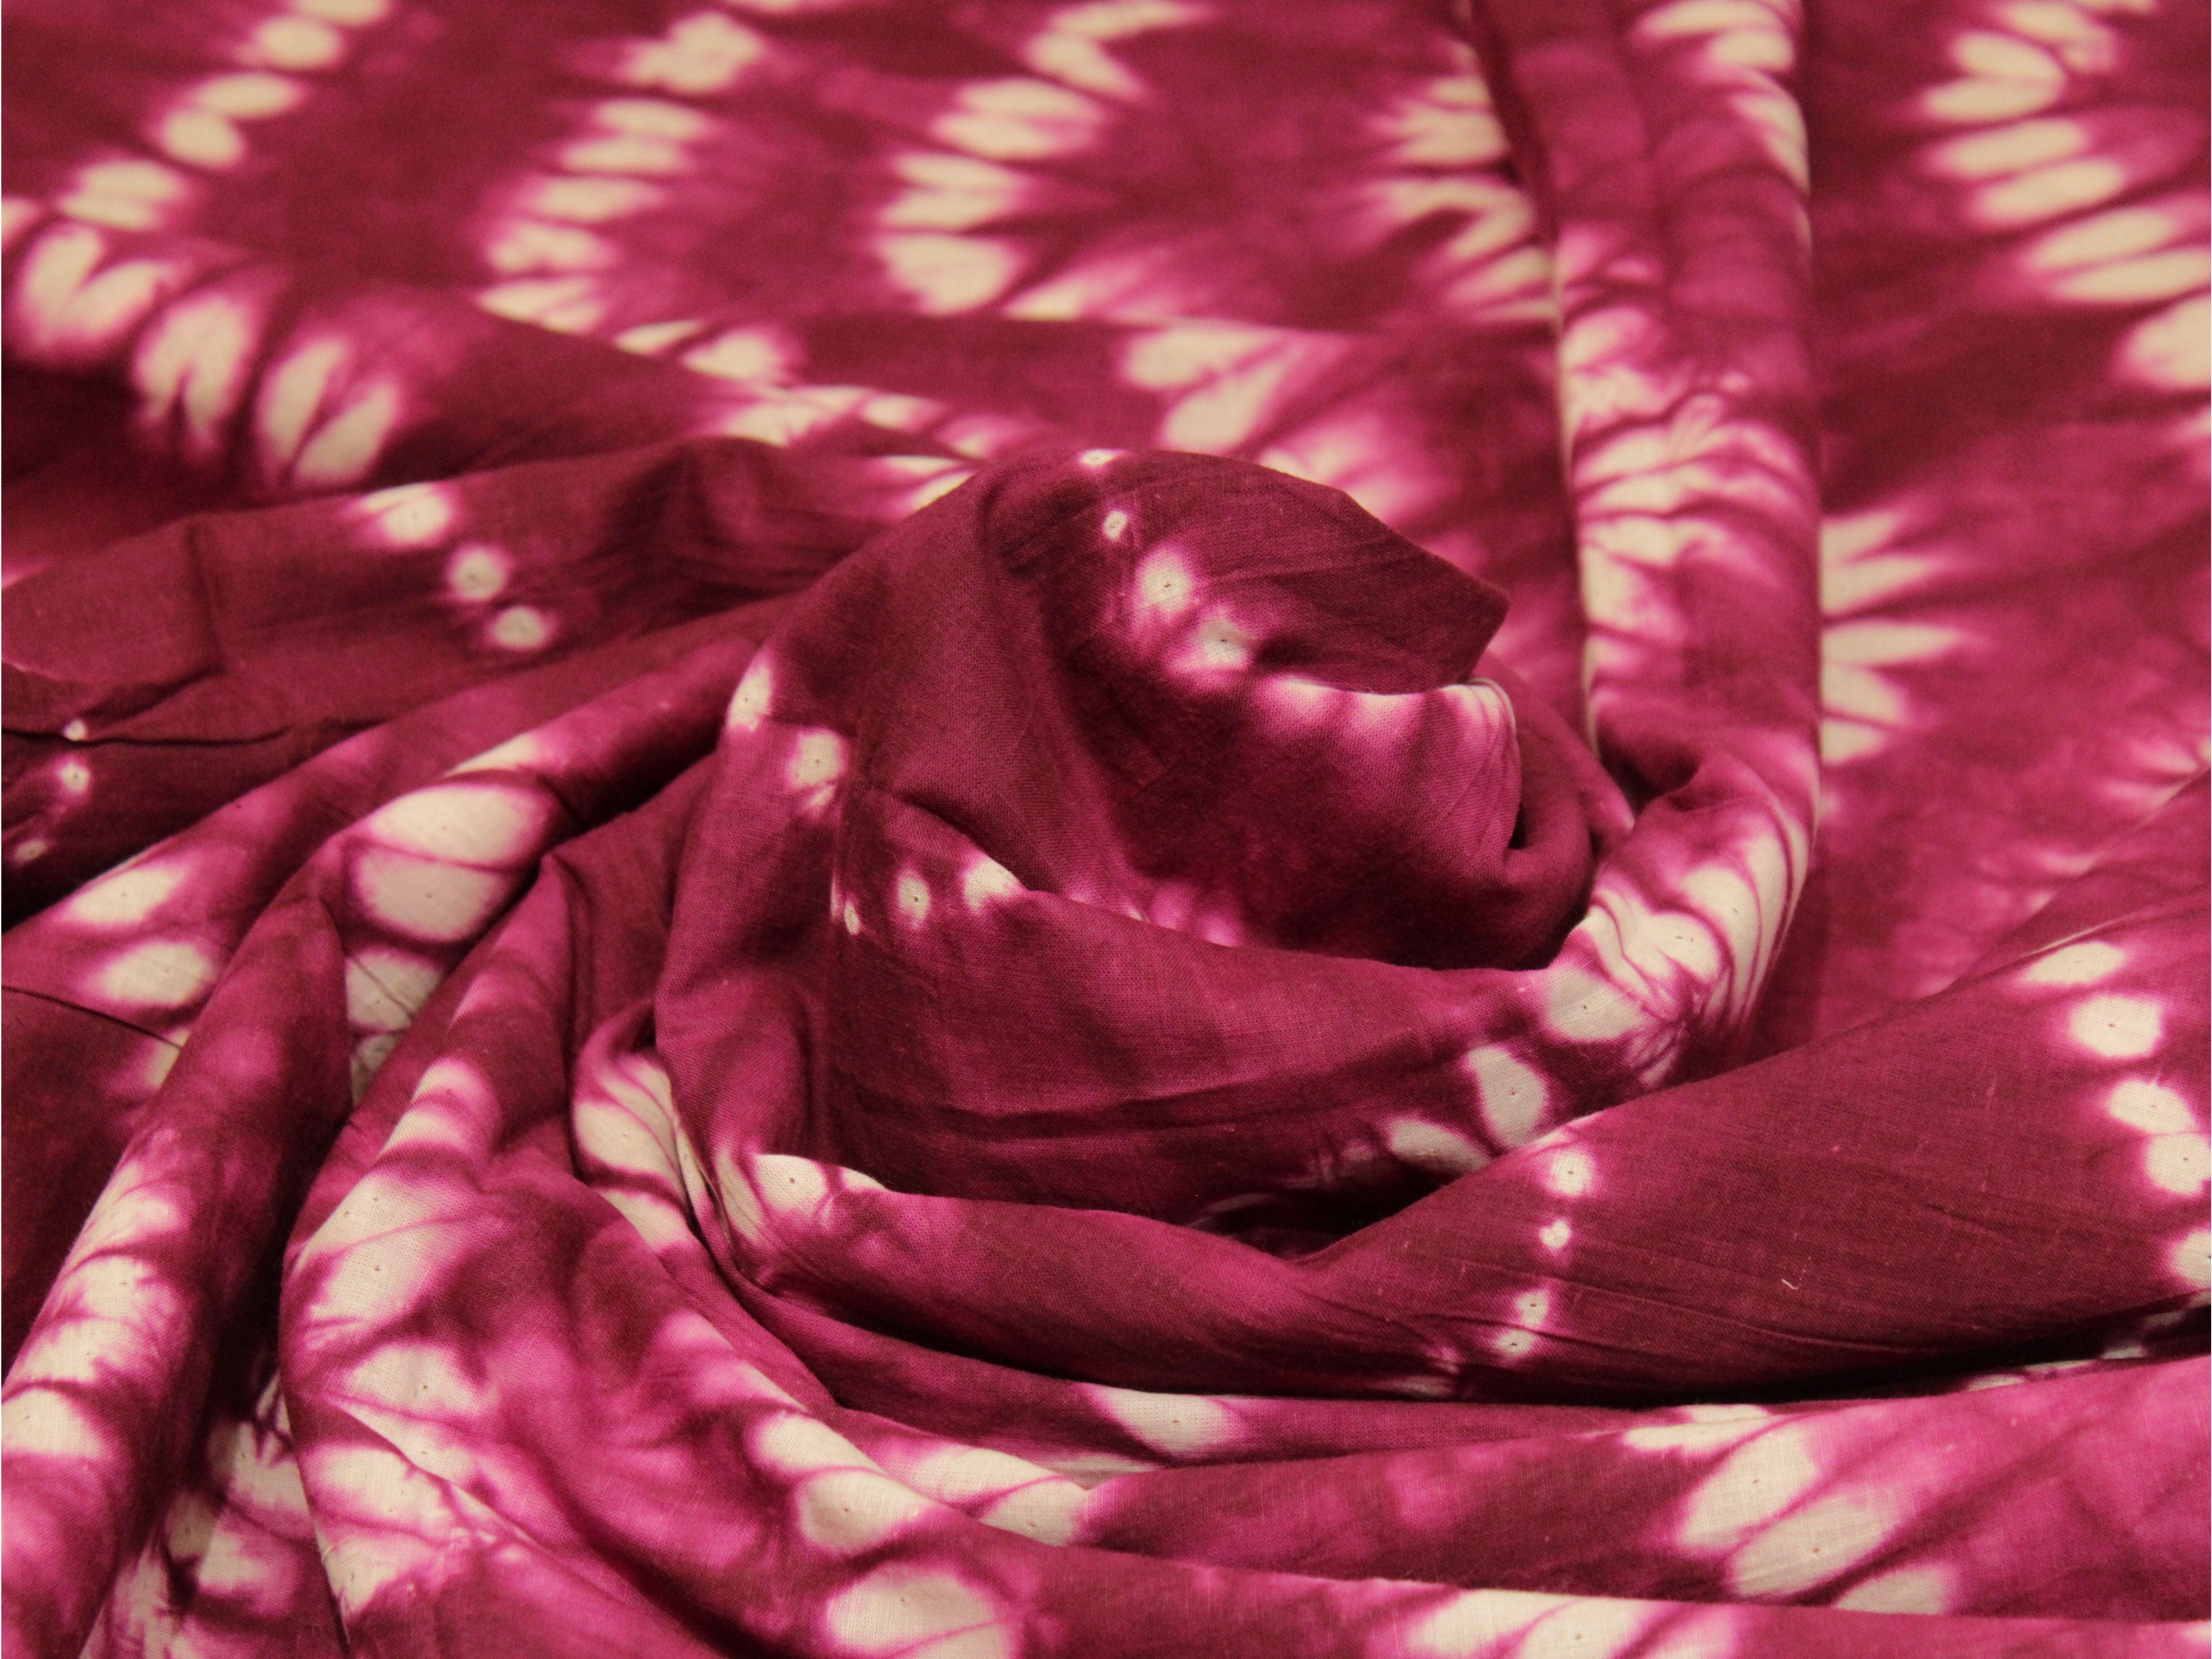 Euphoric - Cotton Hand Block Batik Printed Fabric by M'Foks - M'Foks